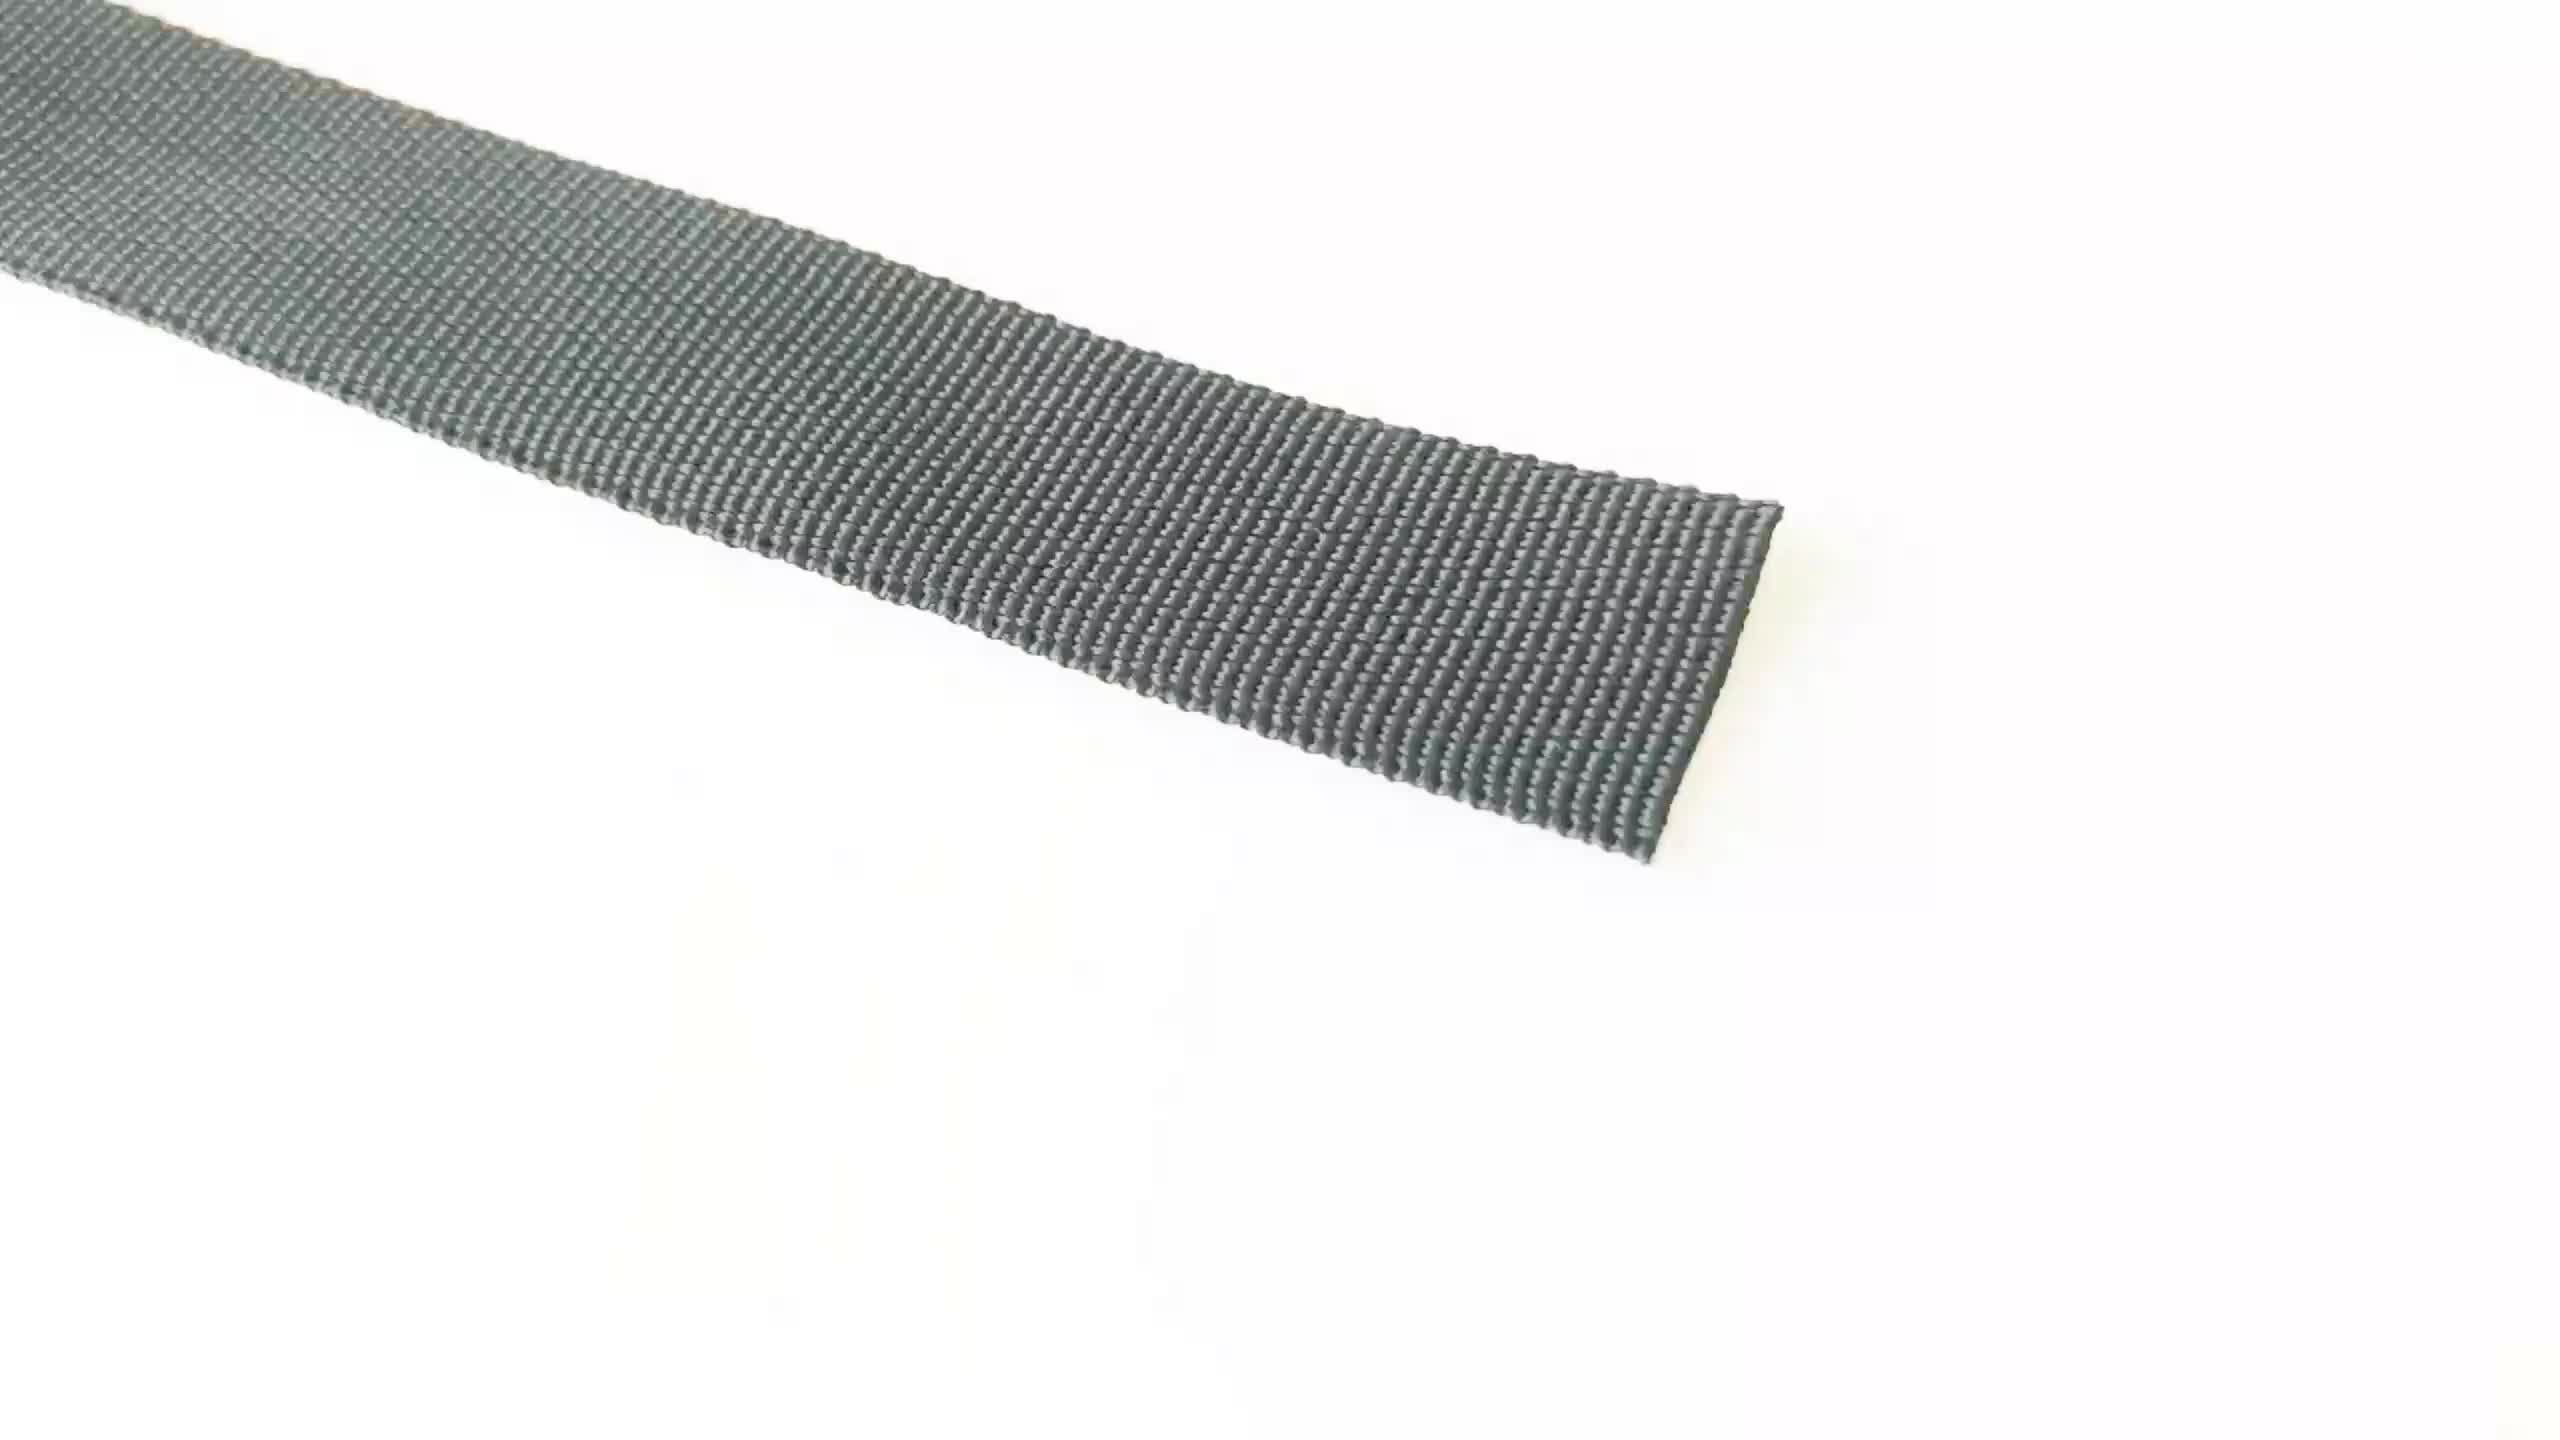 LIUSM 10 Yard Nylon Webbing Strap,Black Durable Flat Straps for Outdoor/DIY Repair